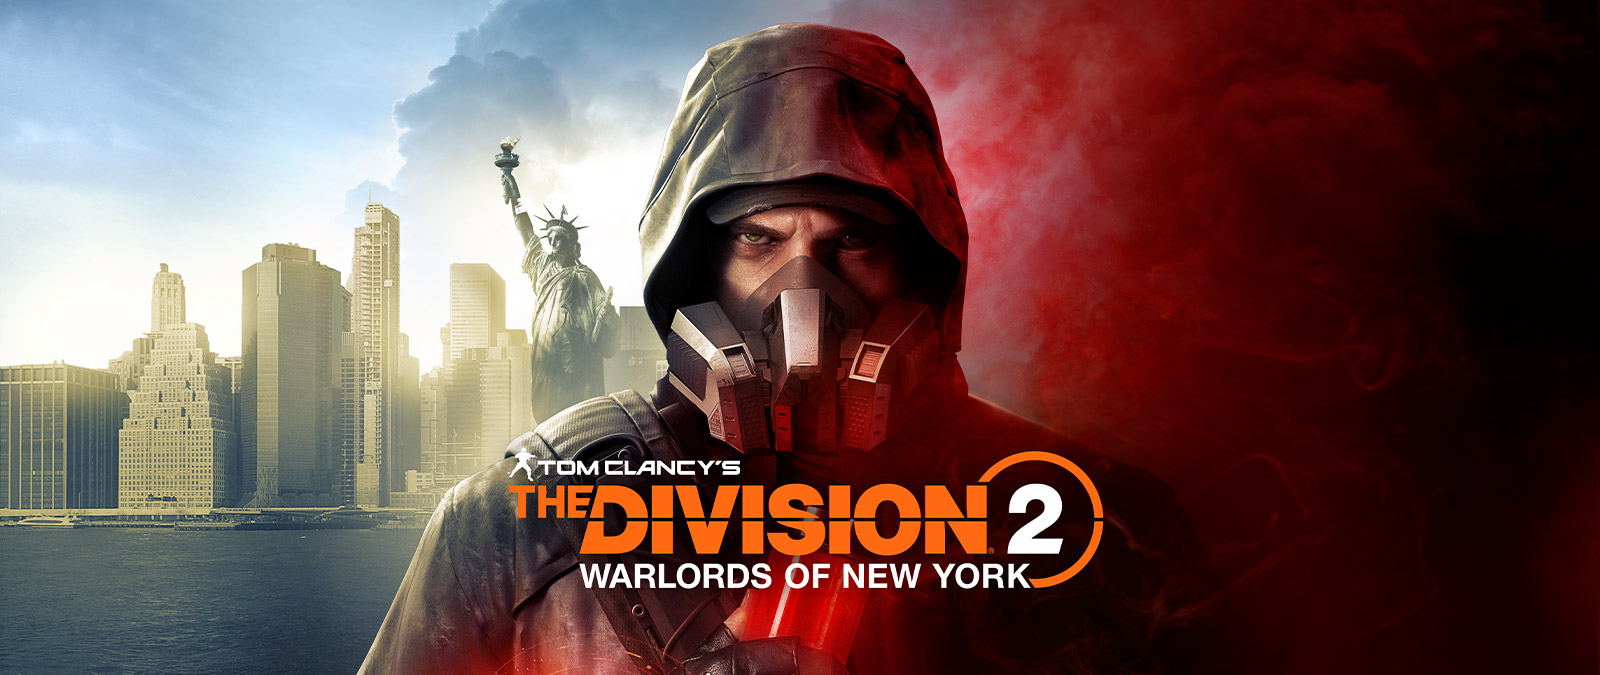 Tom Clancy’s The Division 2 뉴욕의 군벌, Aaron Keener는 가스 마스크를 쓰고 자유의 여신상 앞에 서 있습니다